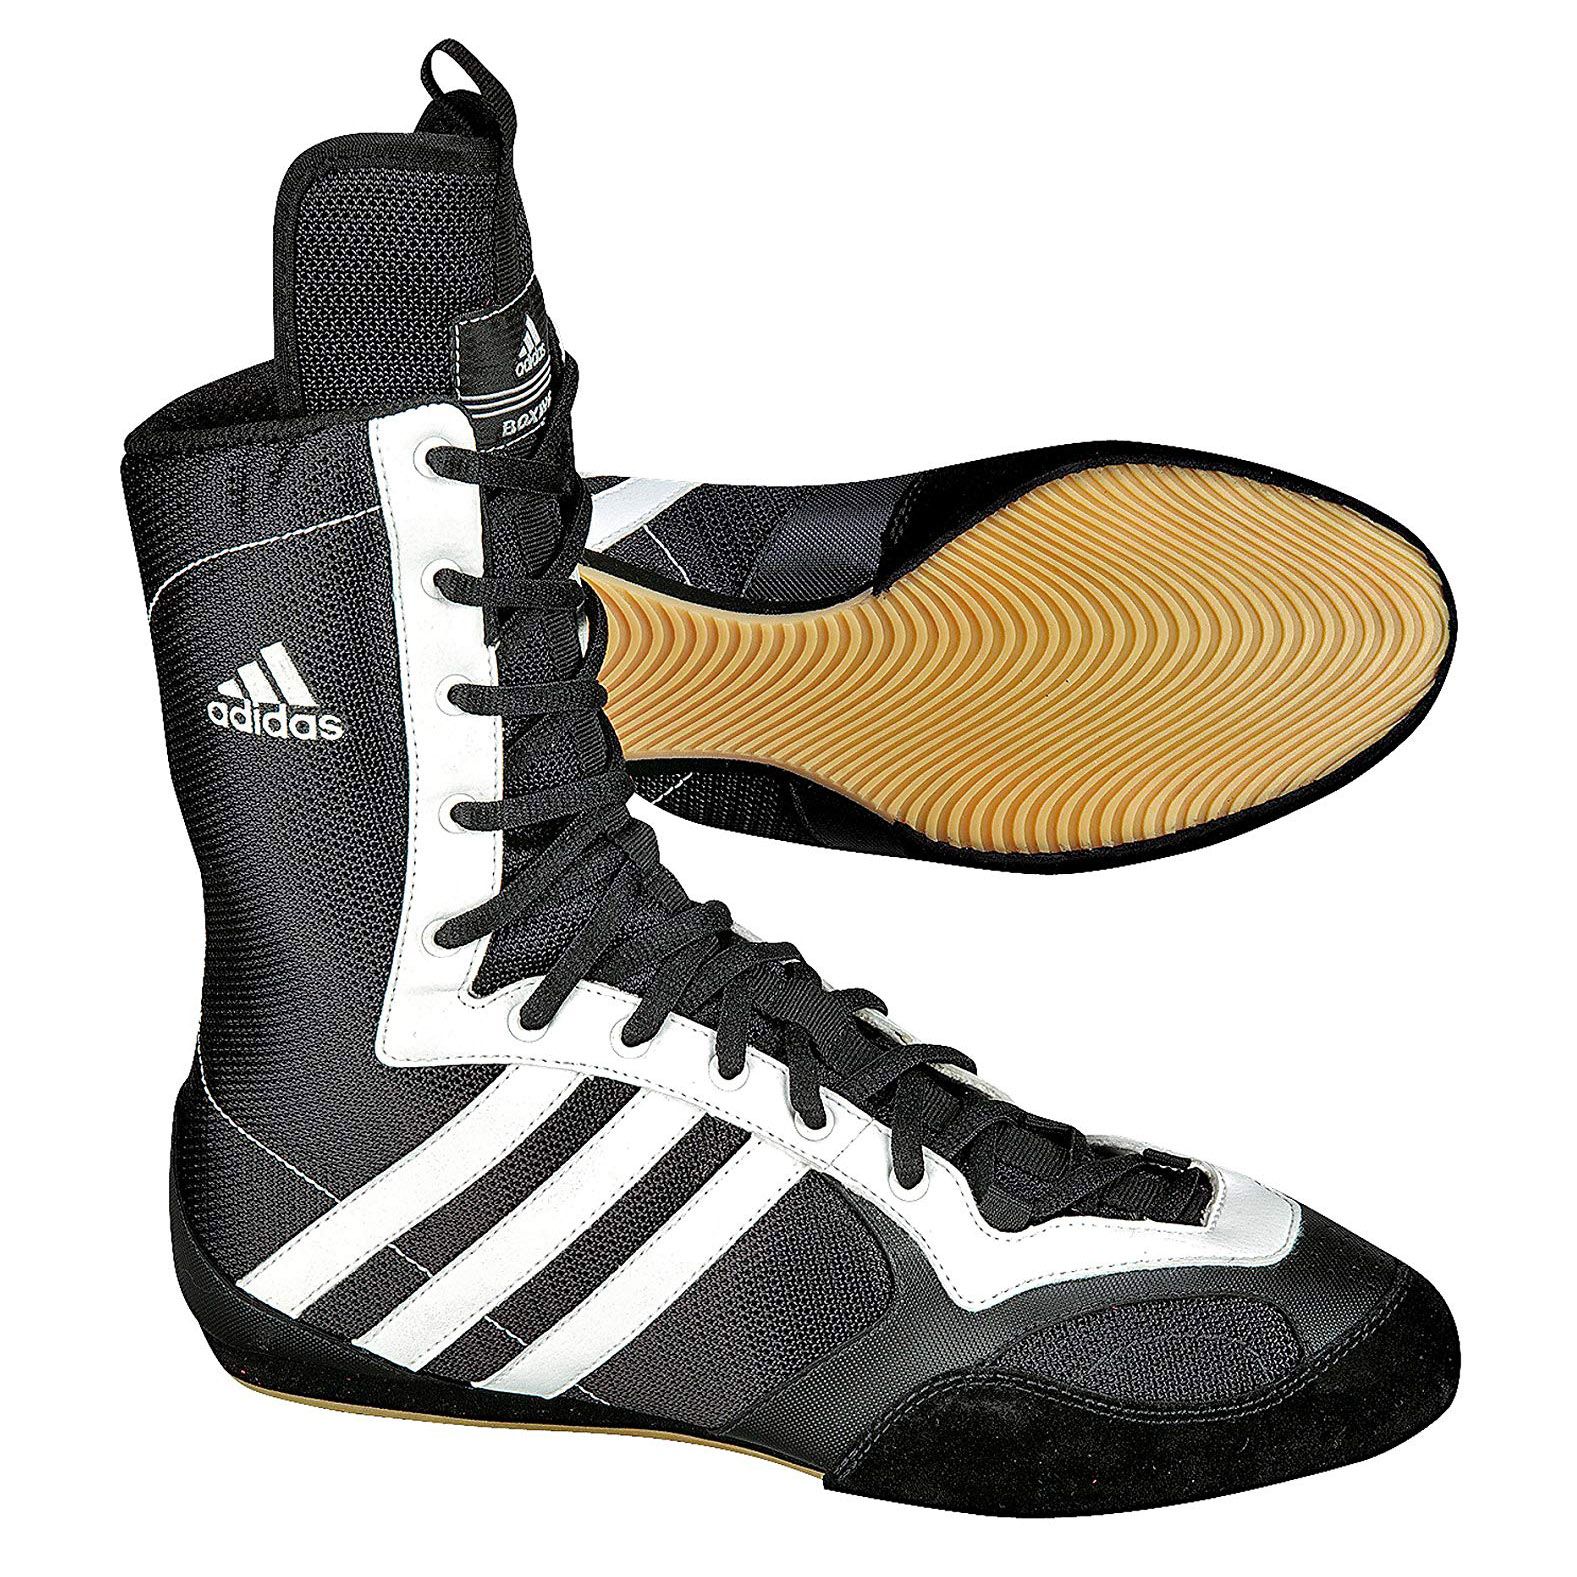 adidas tygun 2 boxing boots